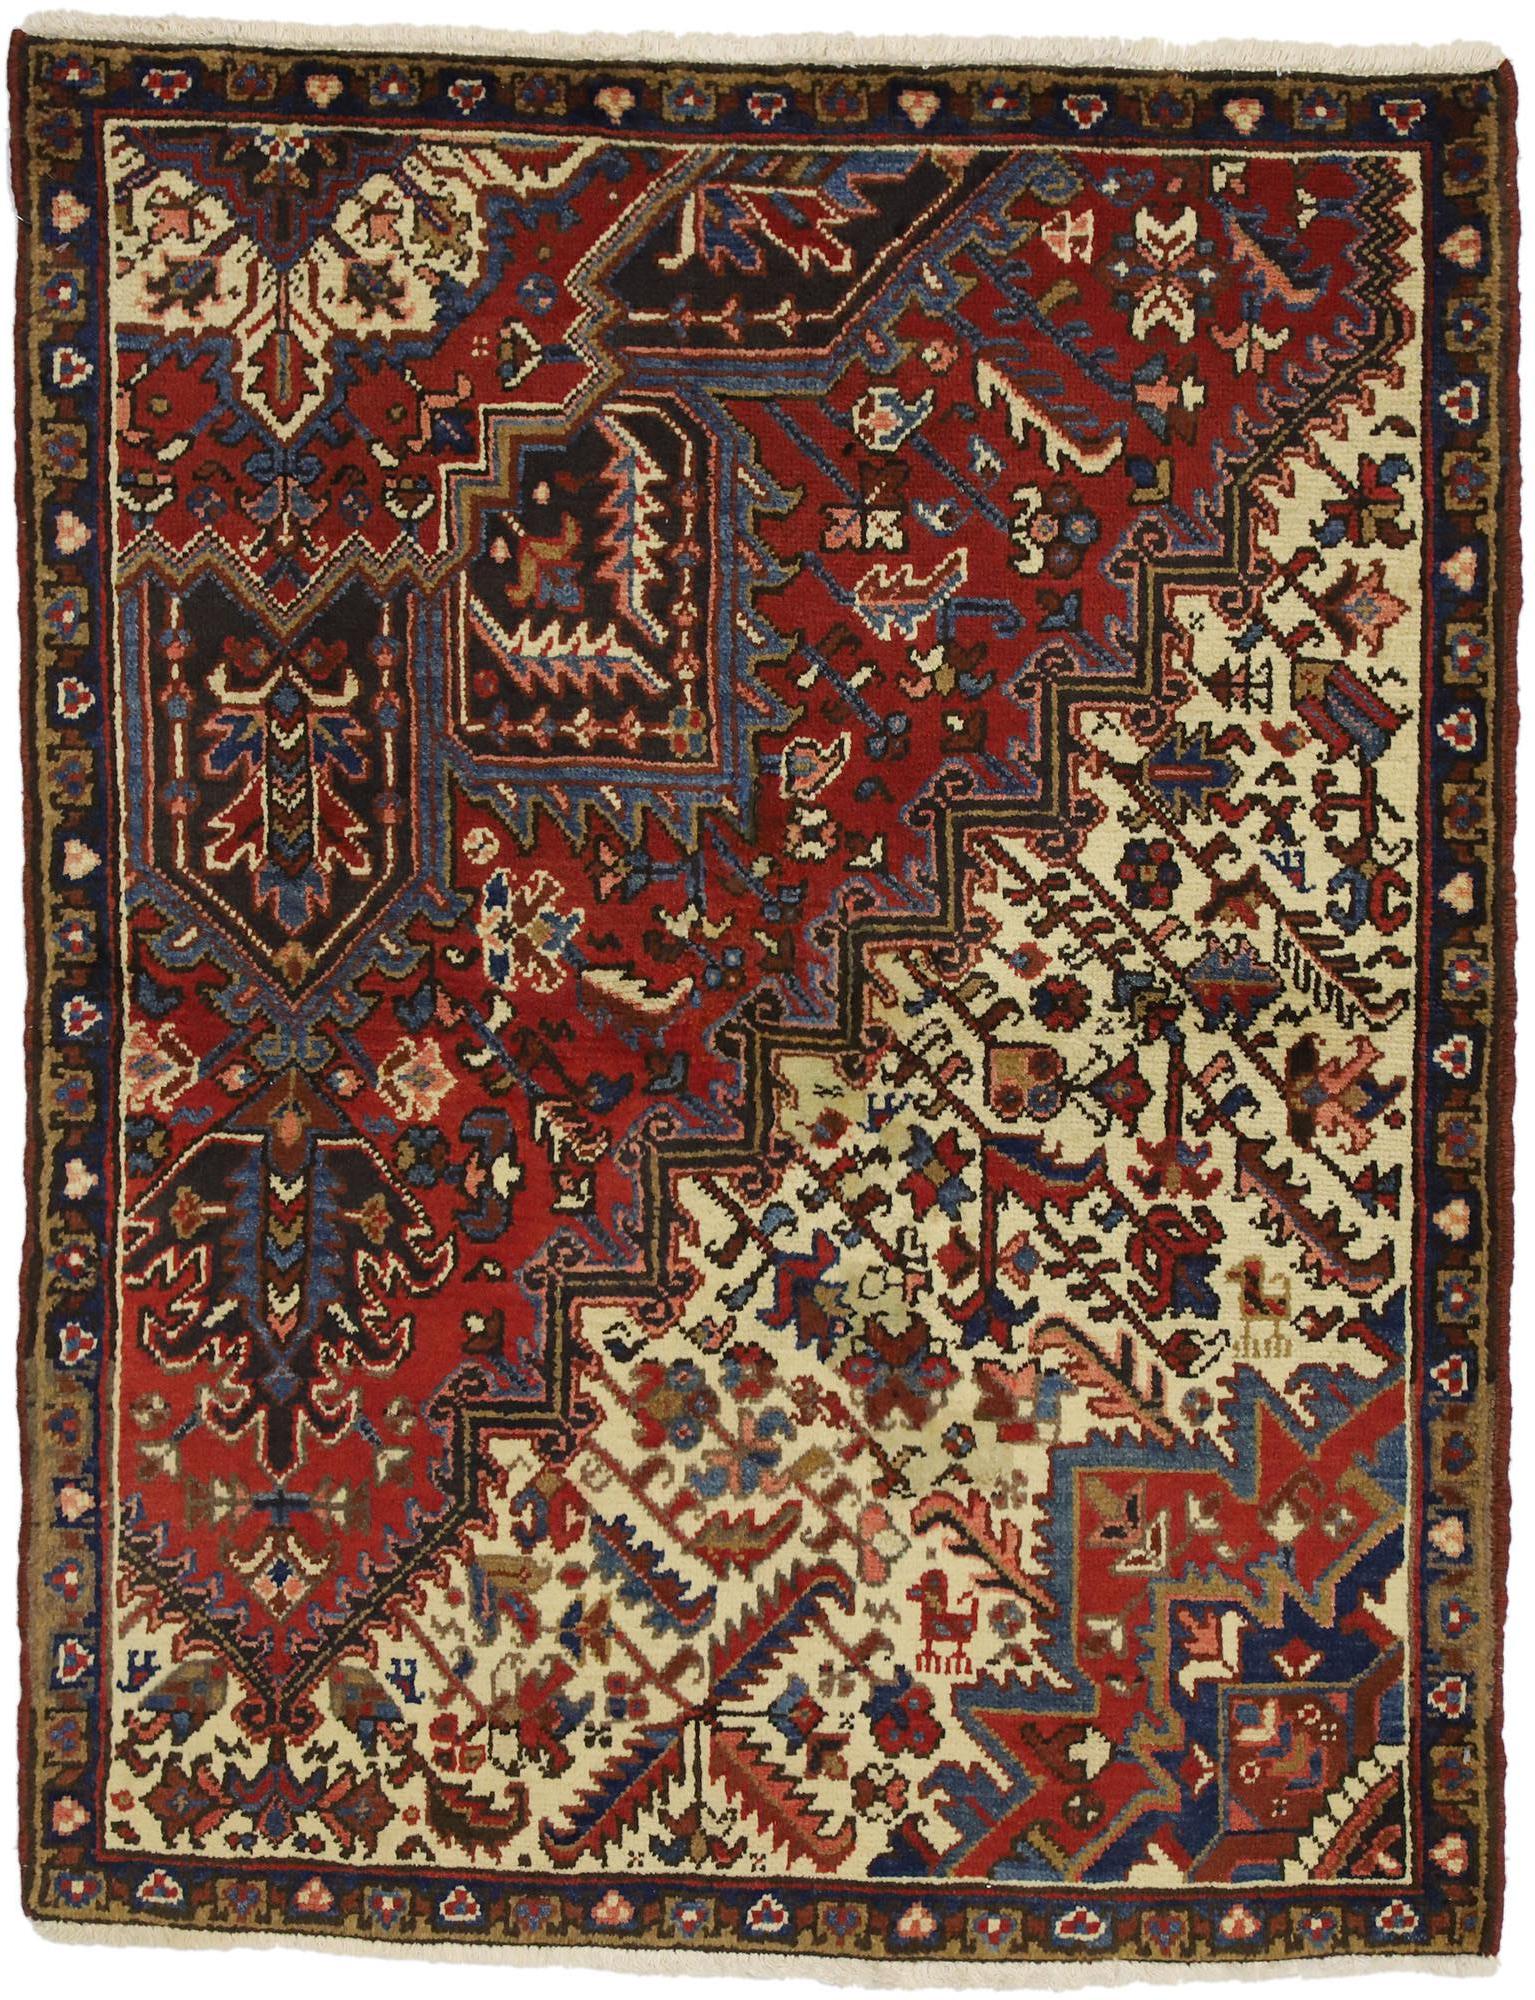 Tapis persan Heriz vintage avec style moderne traditionnel, tapis Wagireh en vente